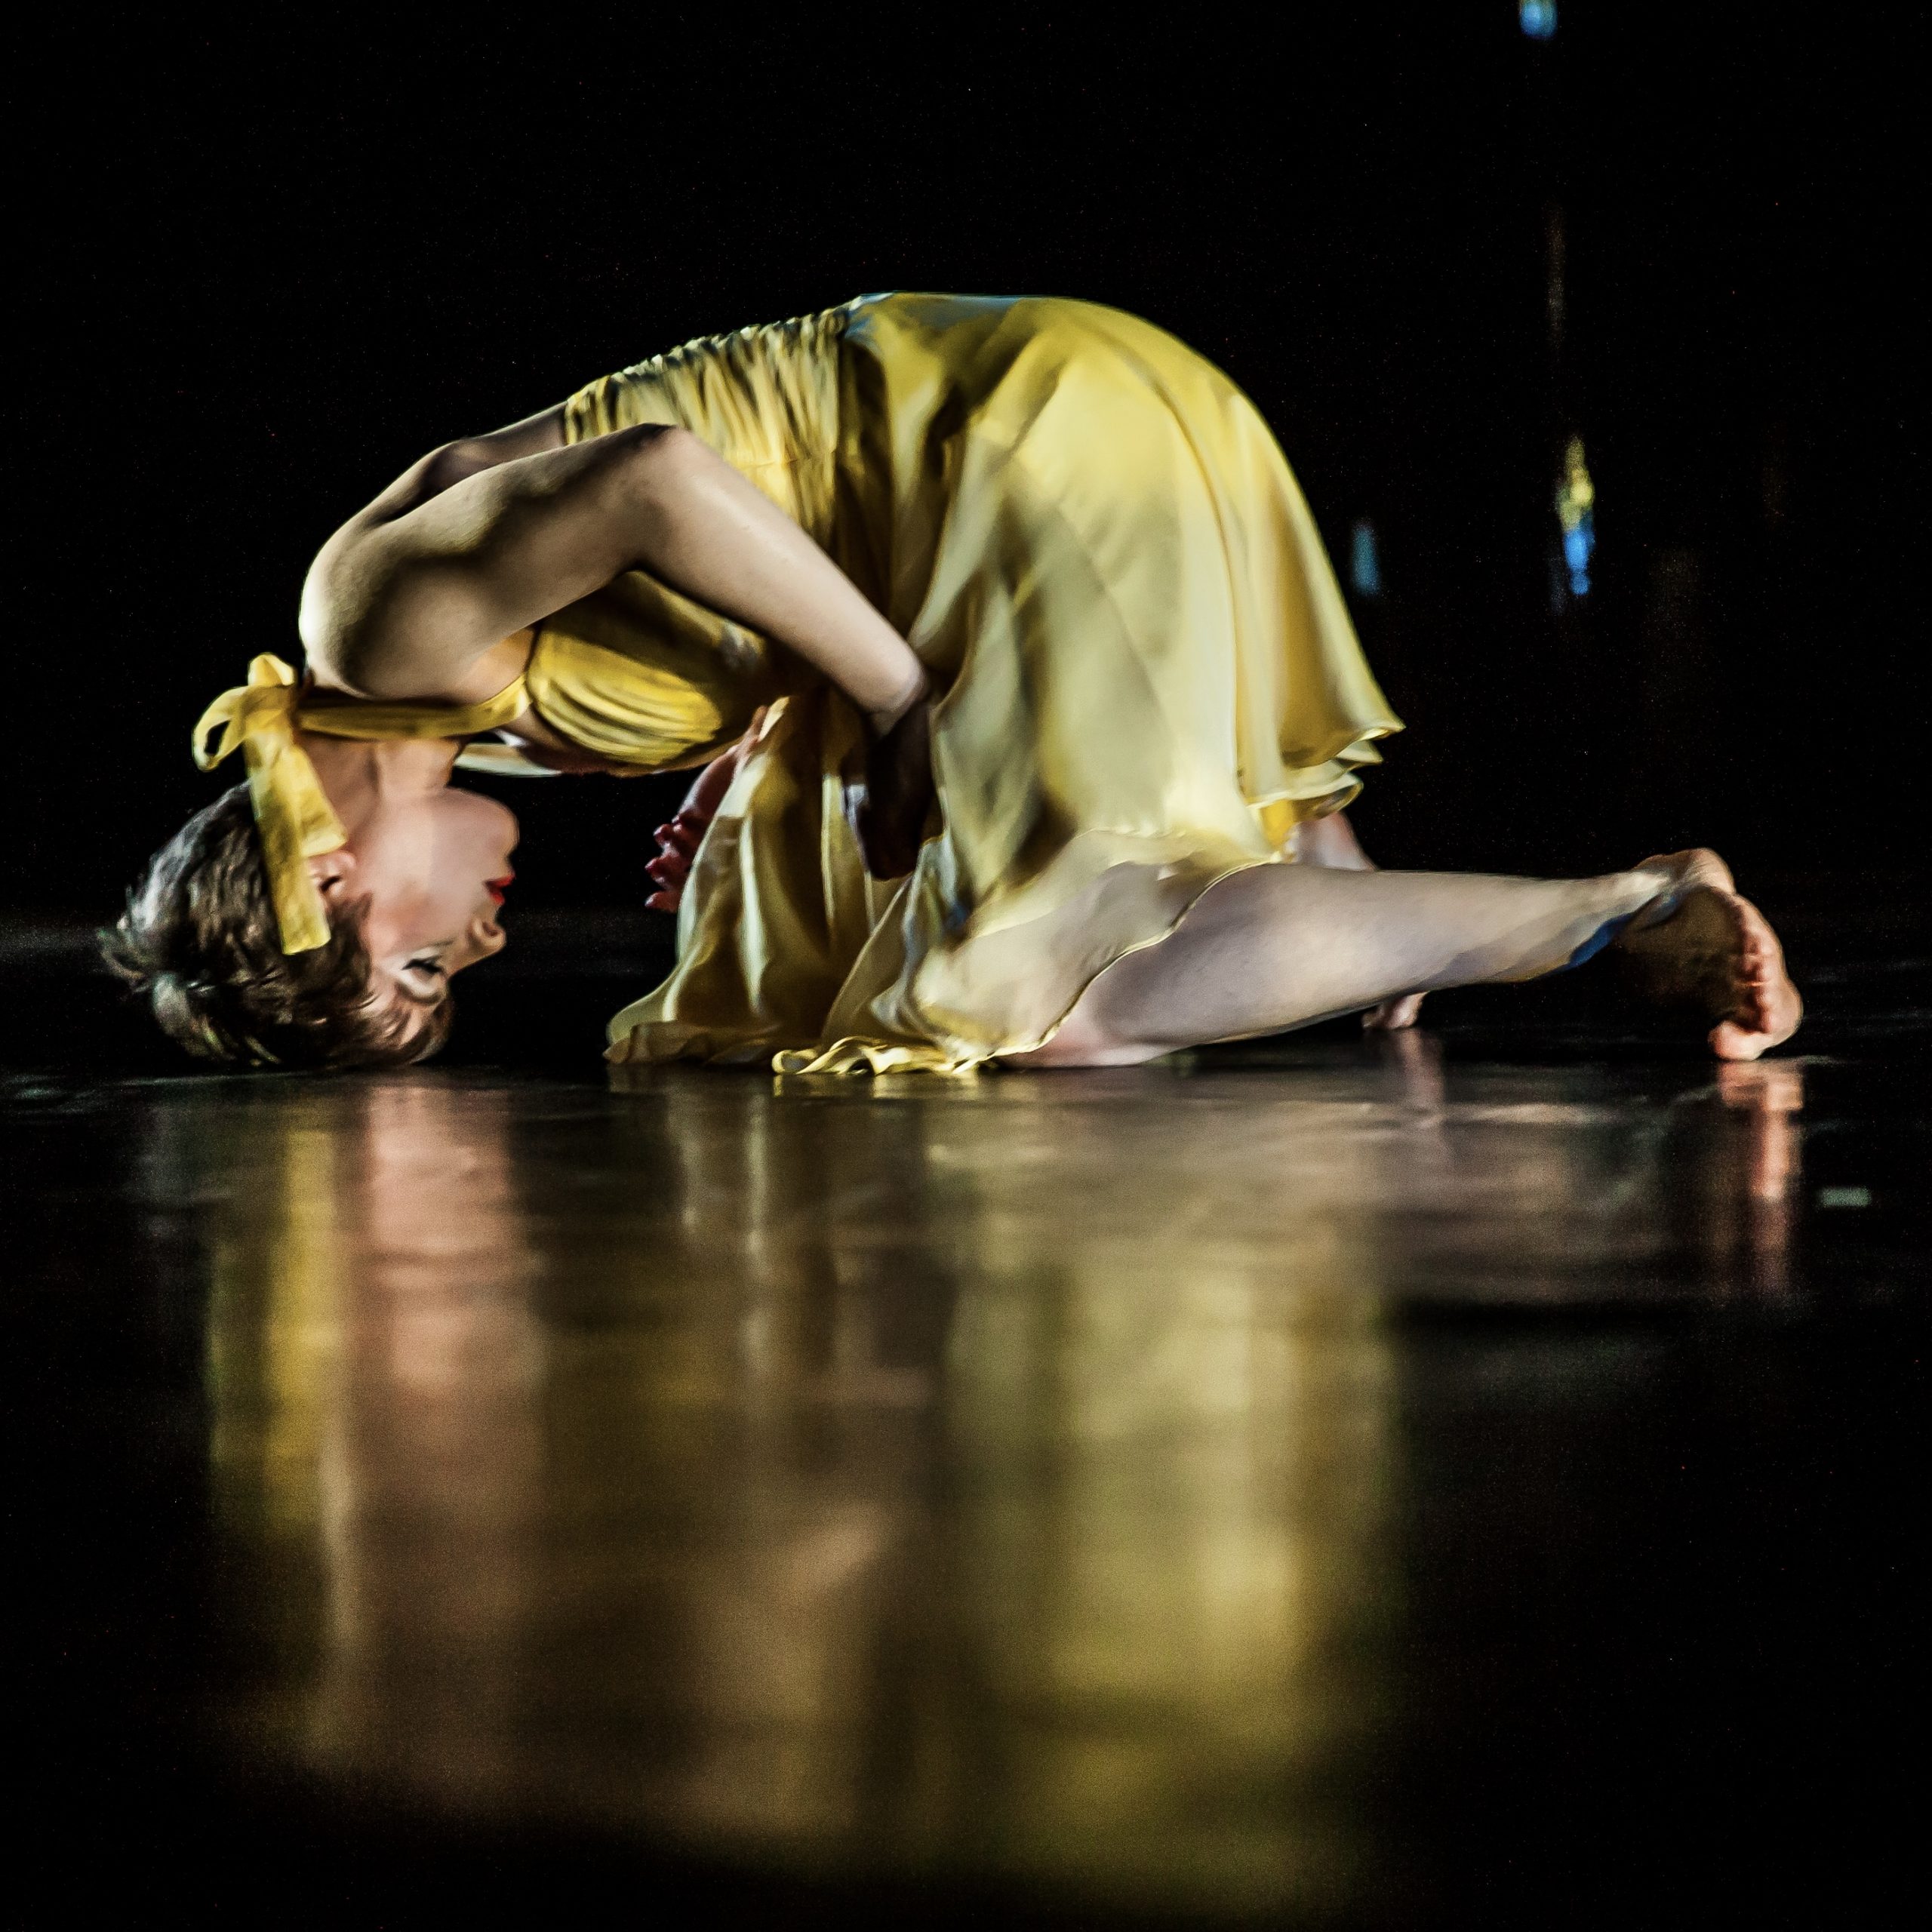 Merryn is kneeling in a yellow dress, head bowed to the floor.